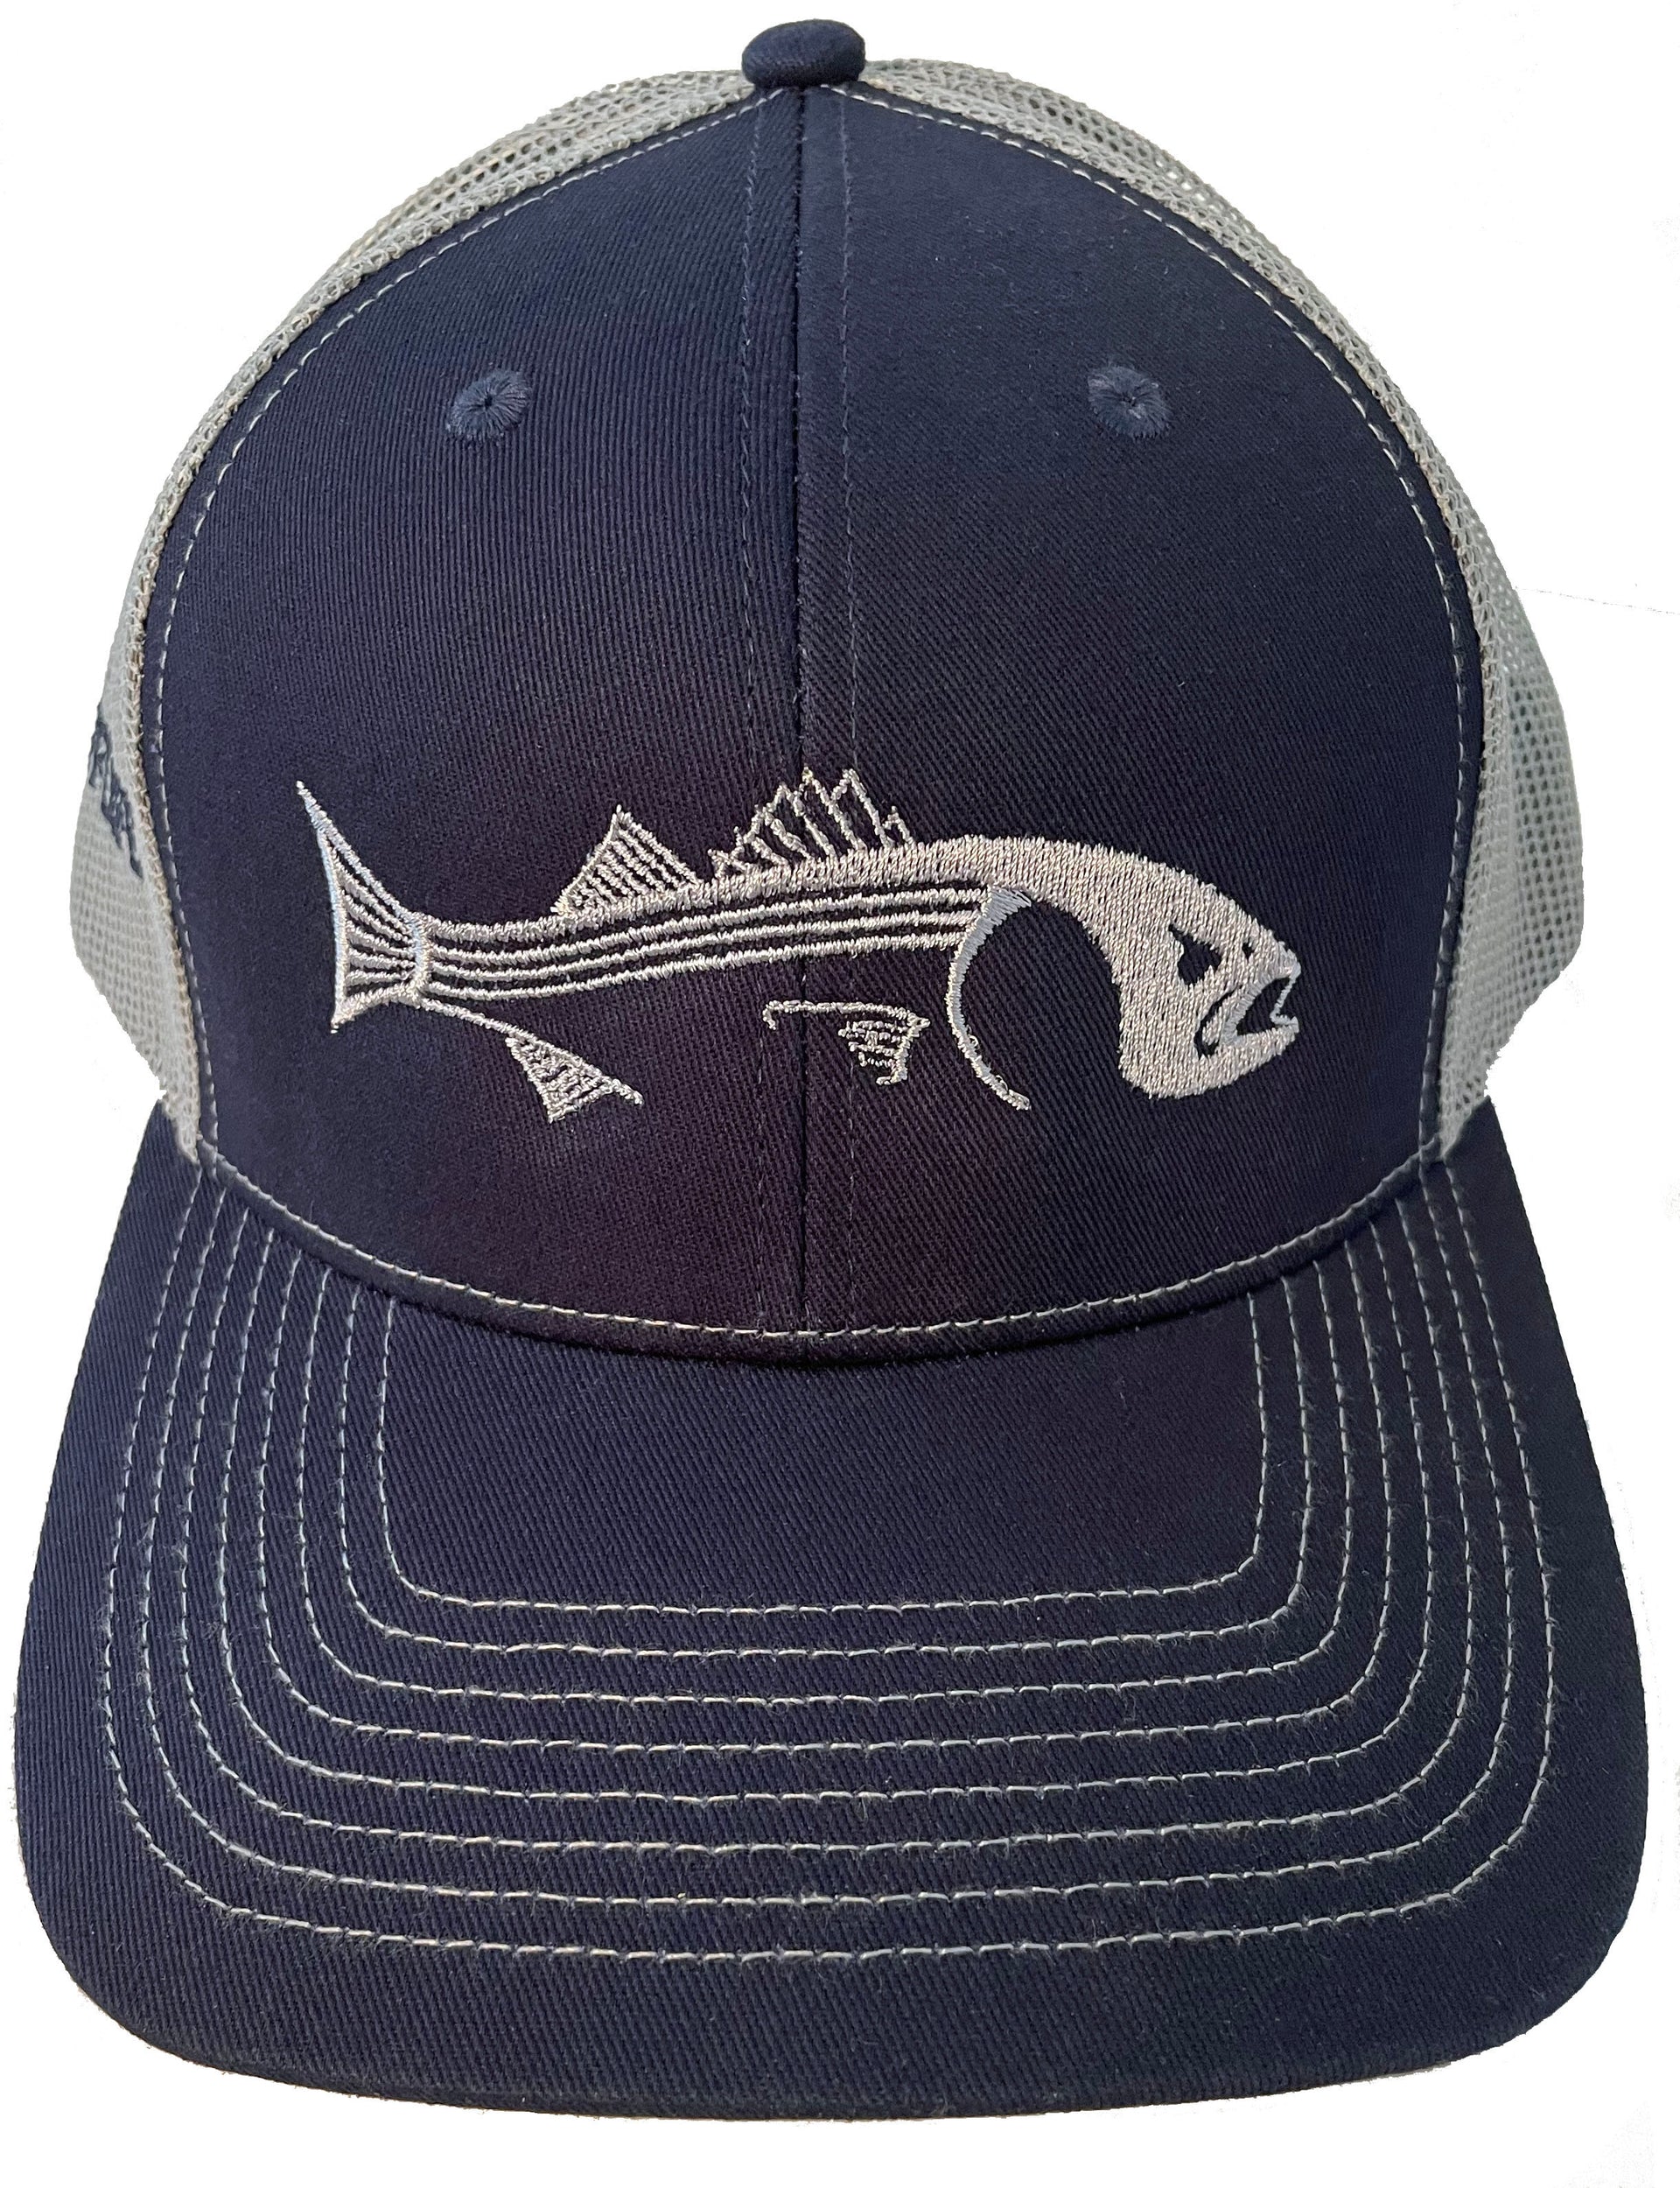 Fish Lake Berkeley Tan, Navy Hat